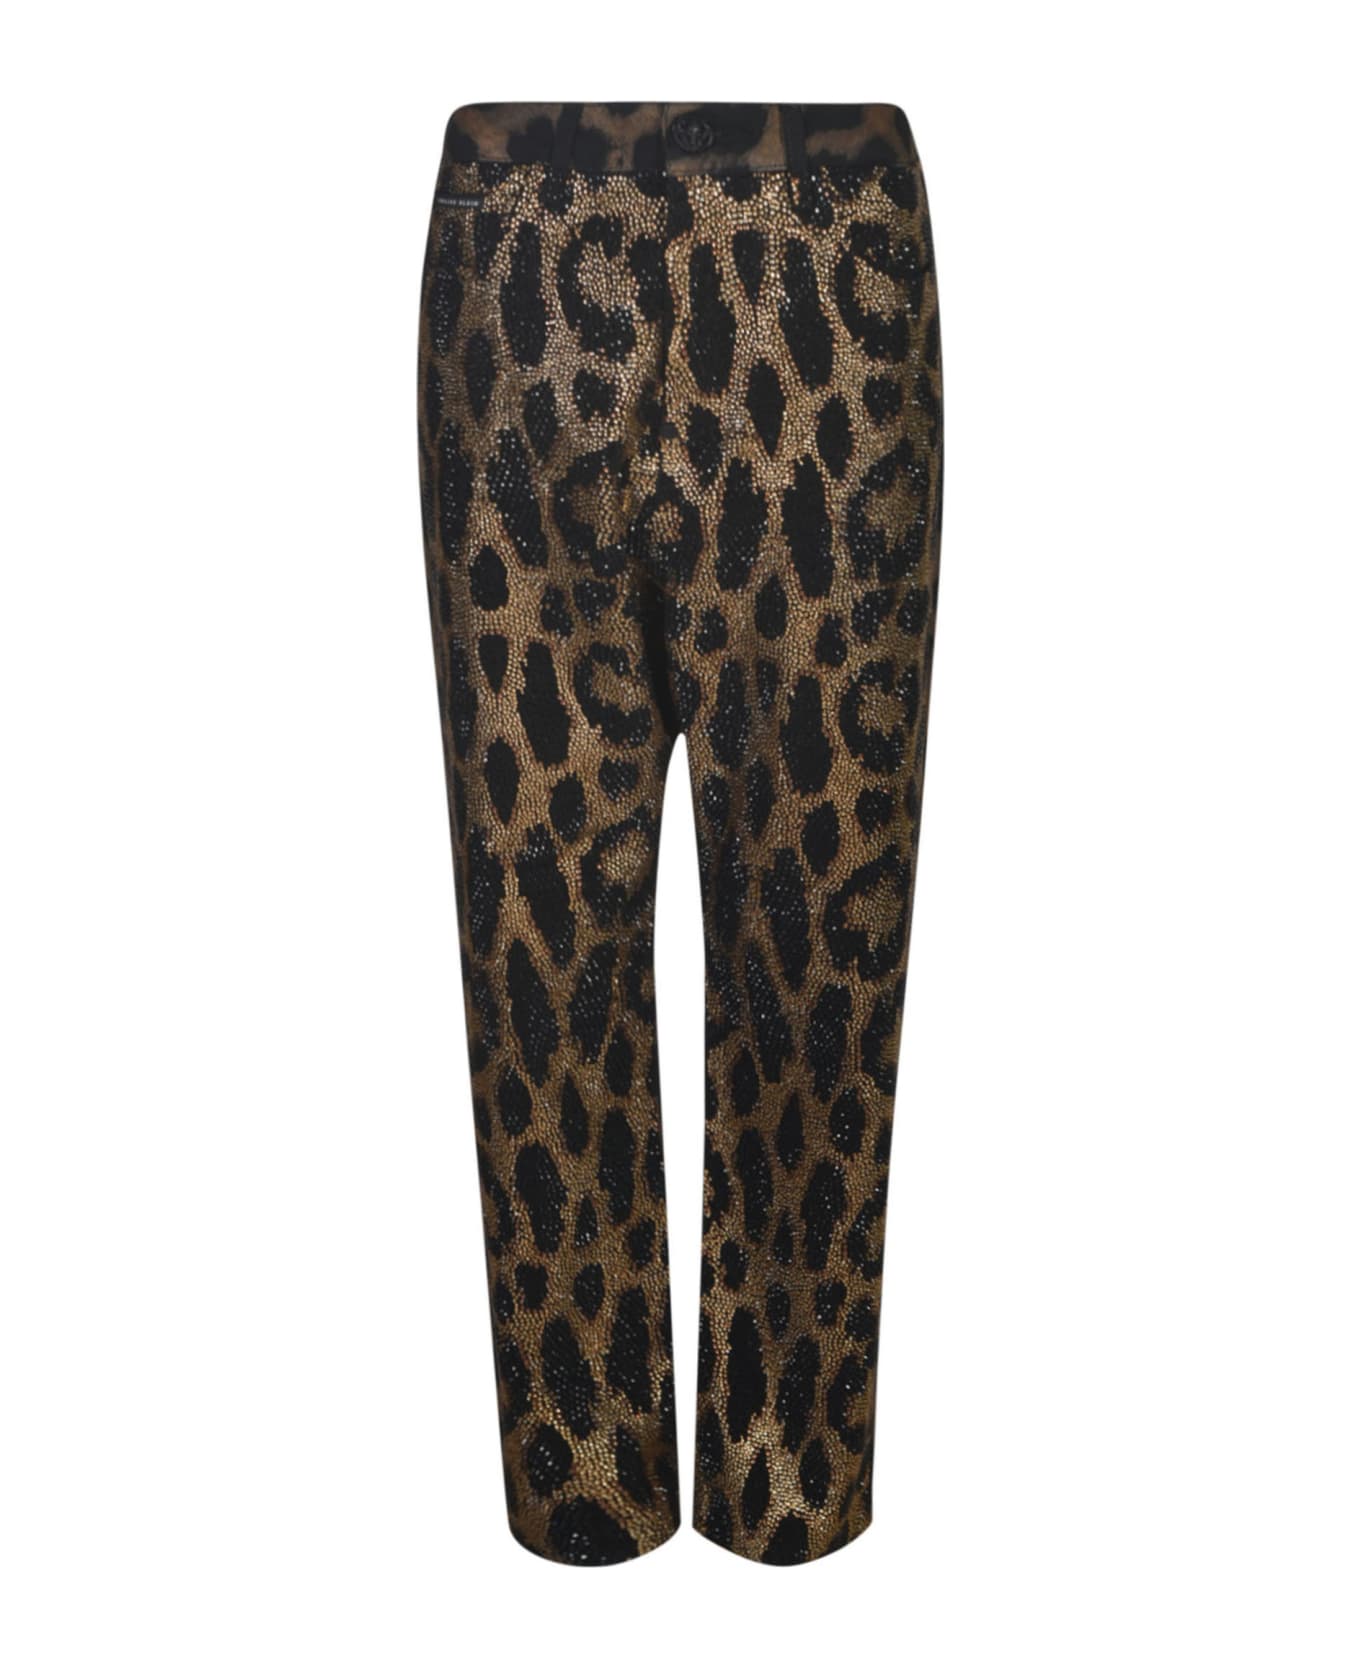 Philipp Plein Animal Print Trousers - Leopard